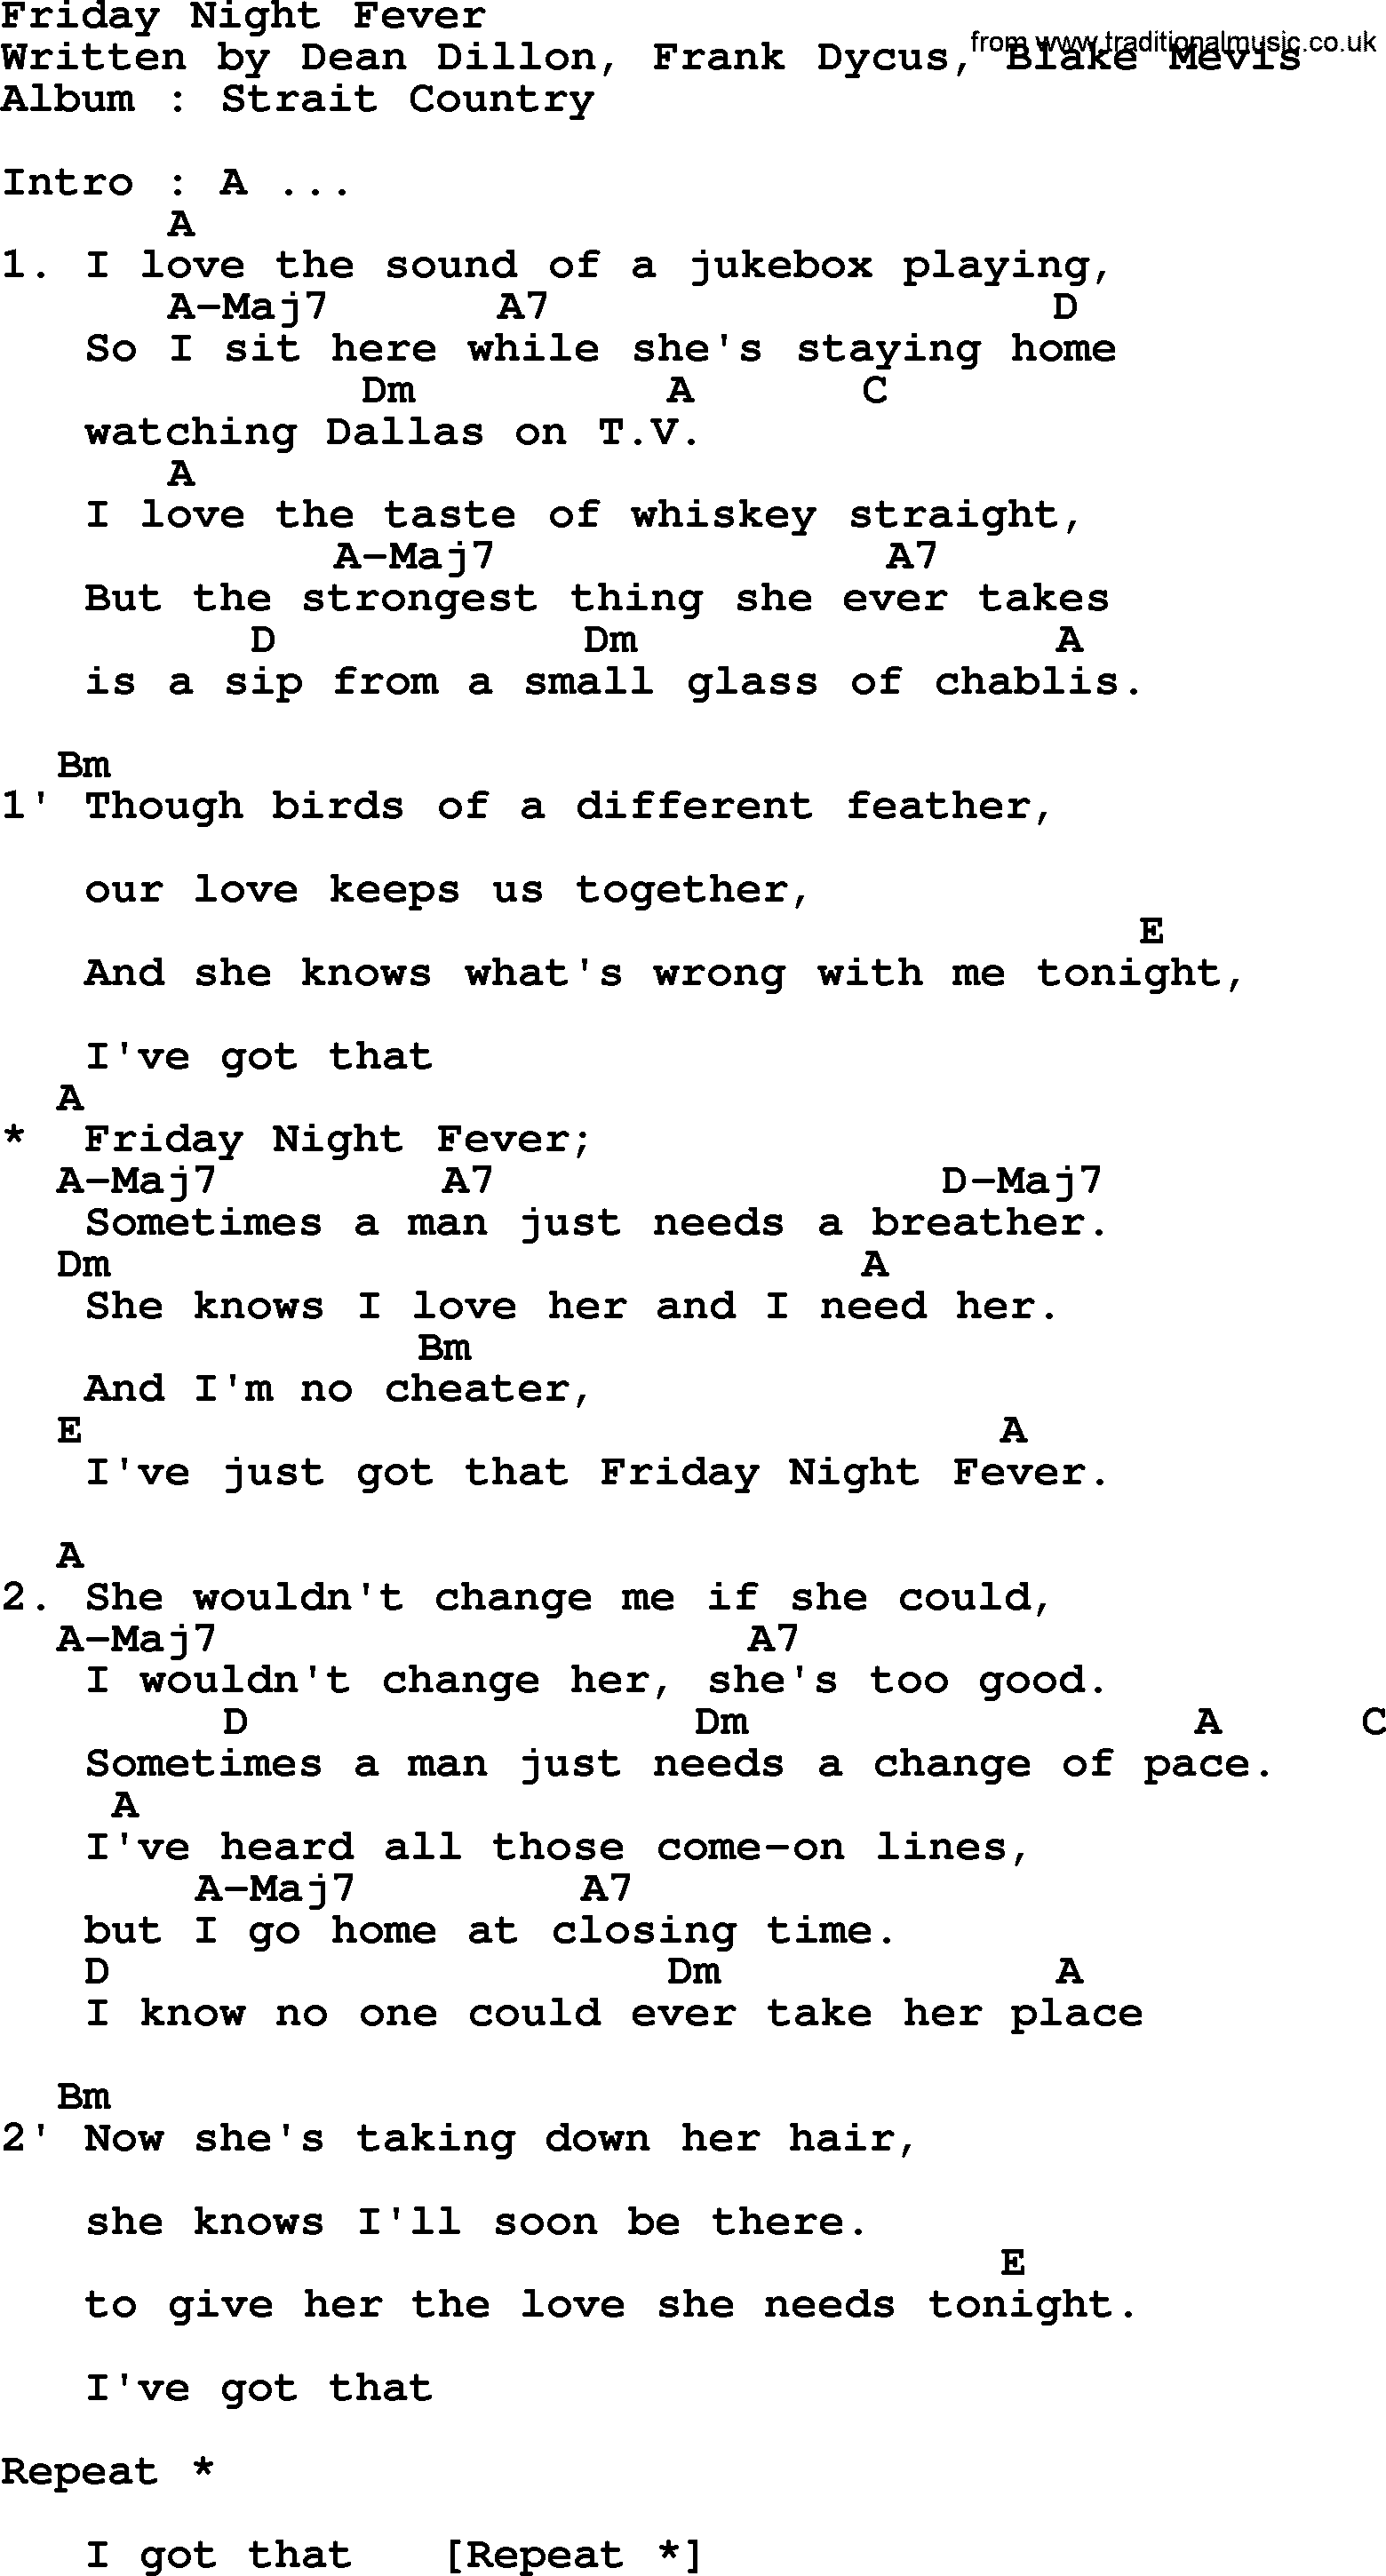 Friday Night Fever, by George Strait - lyrics and chords1560 x 2900